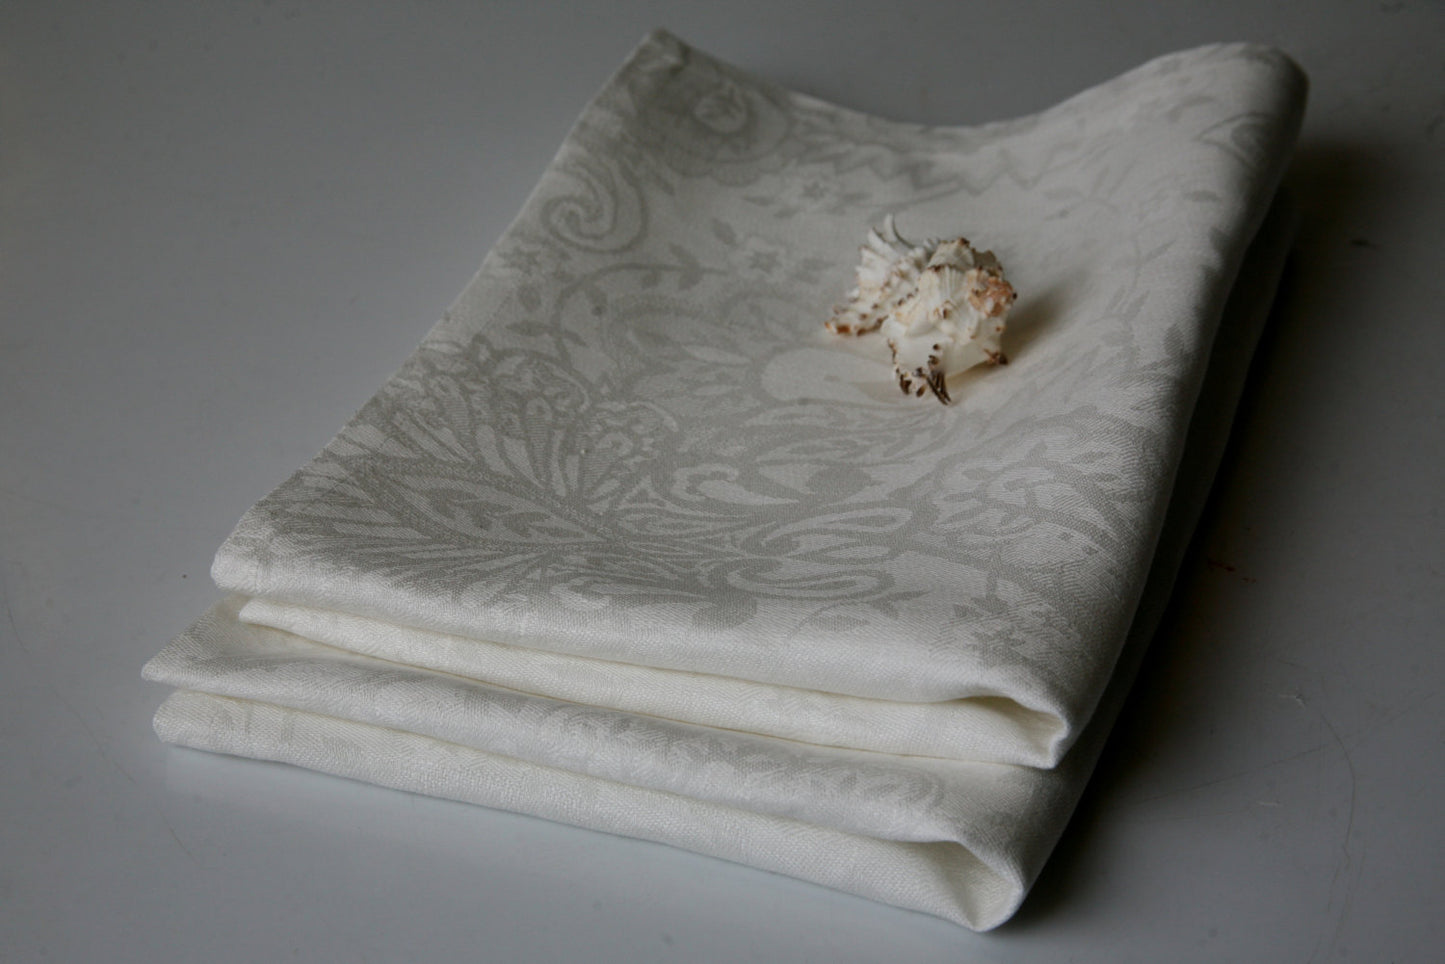 Linen Natural Bath Towel With Jacquard Paisley Design / Hygge Bath Towel Organic